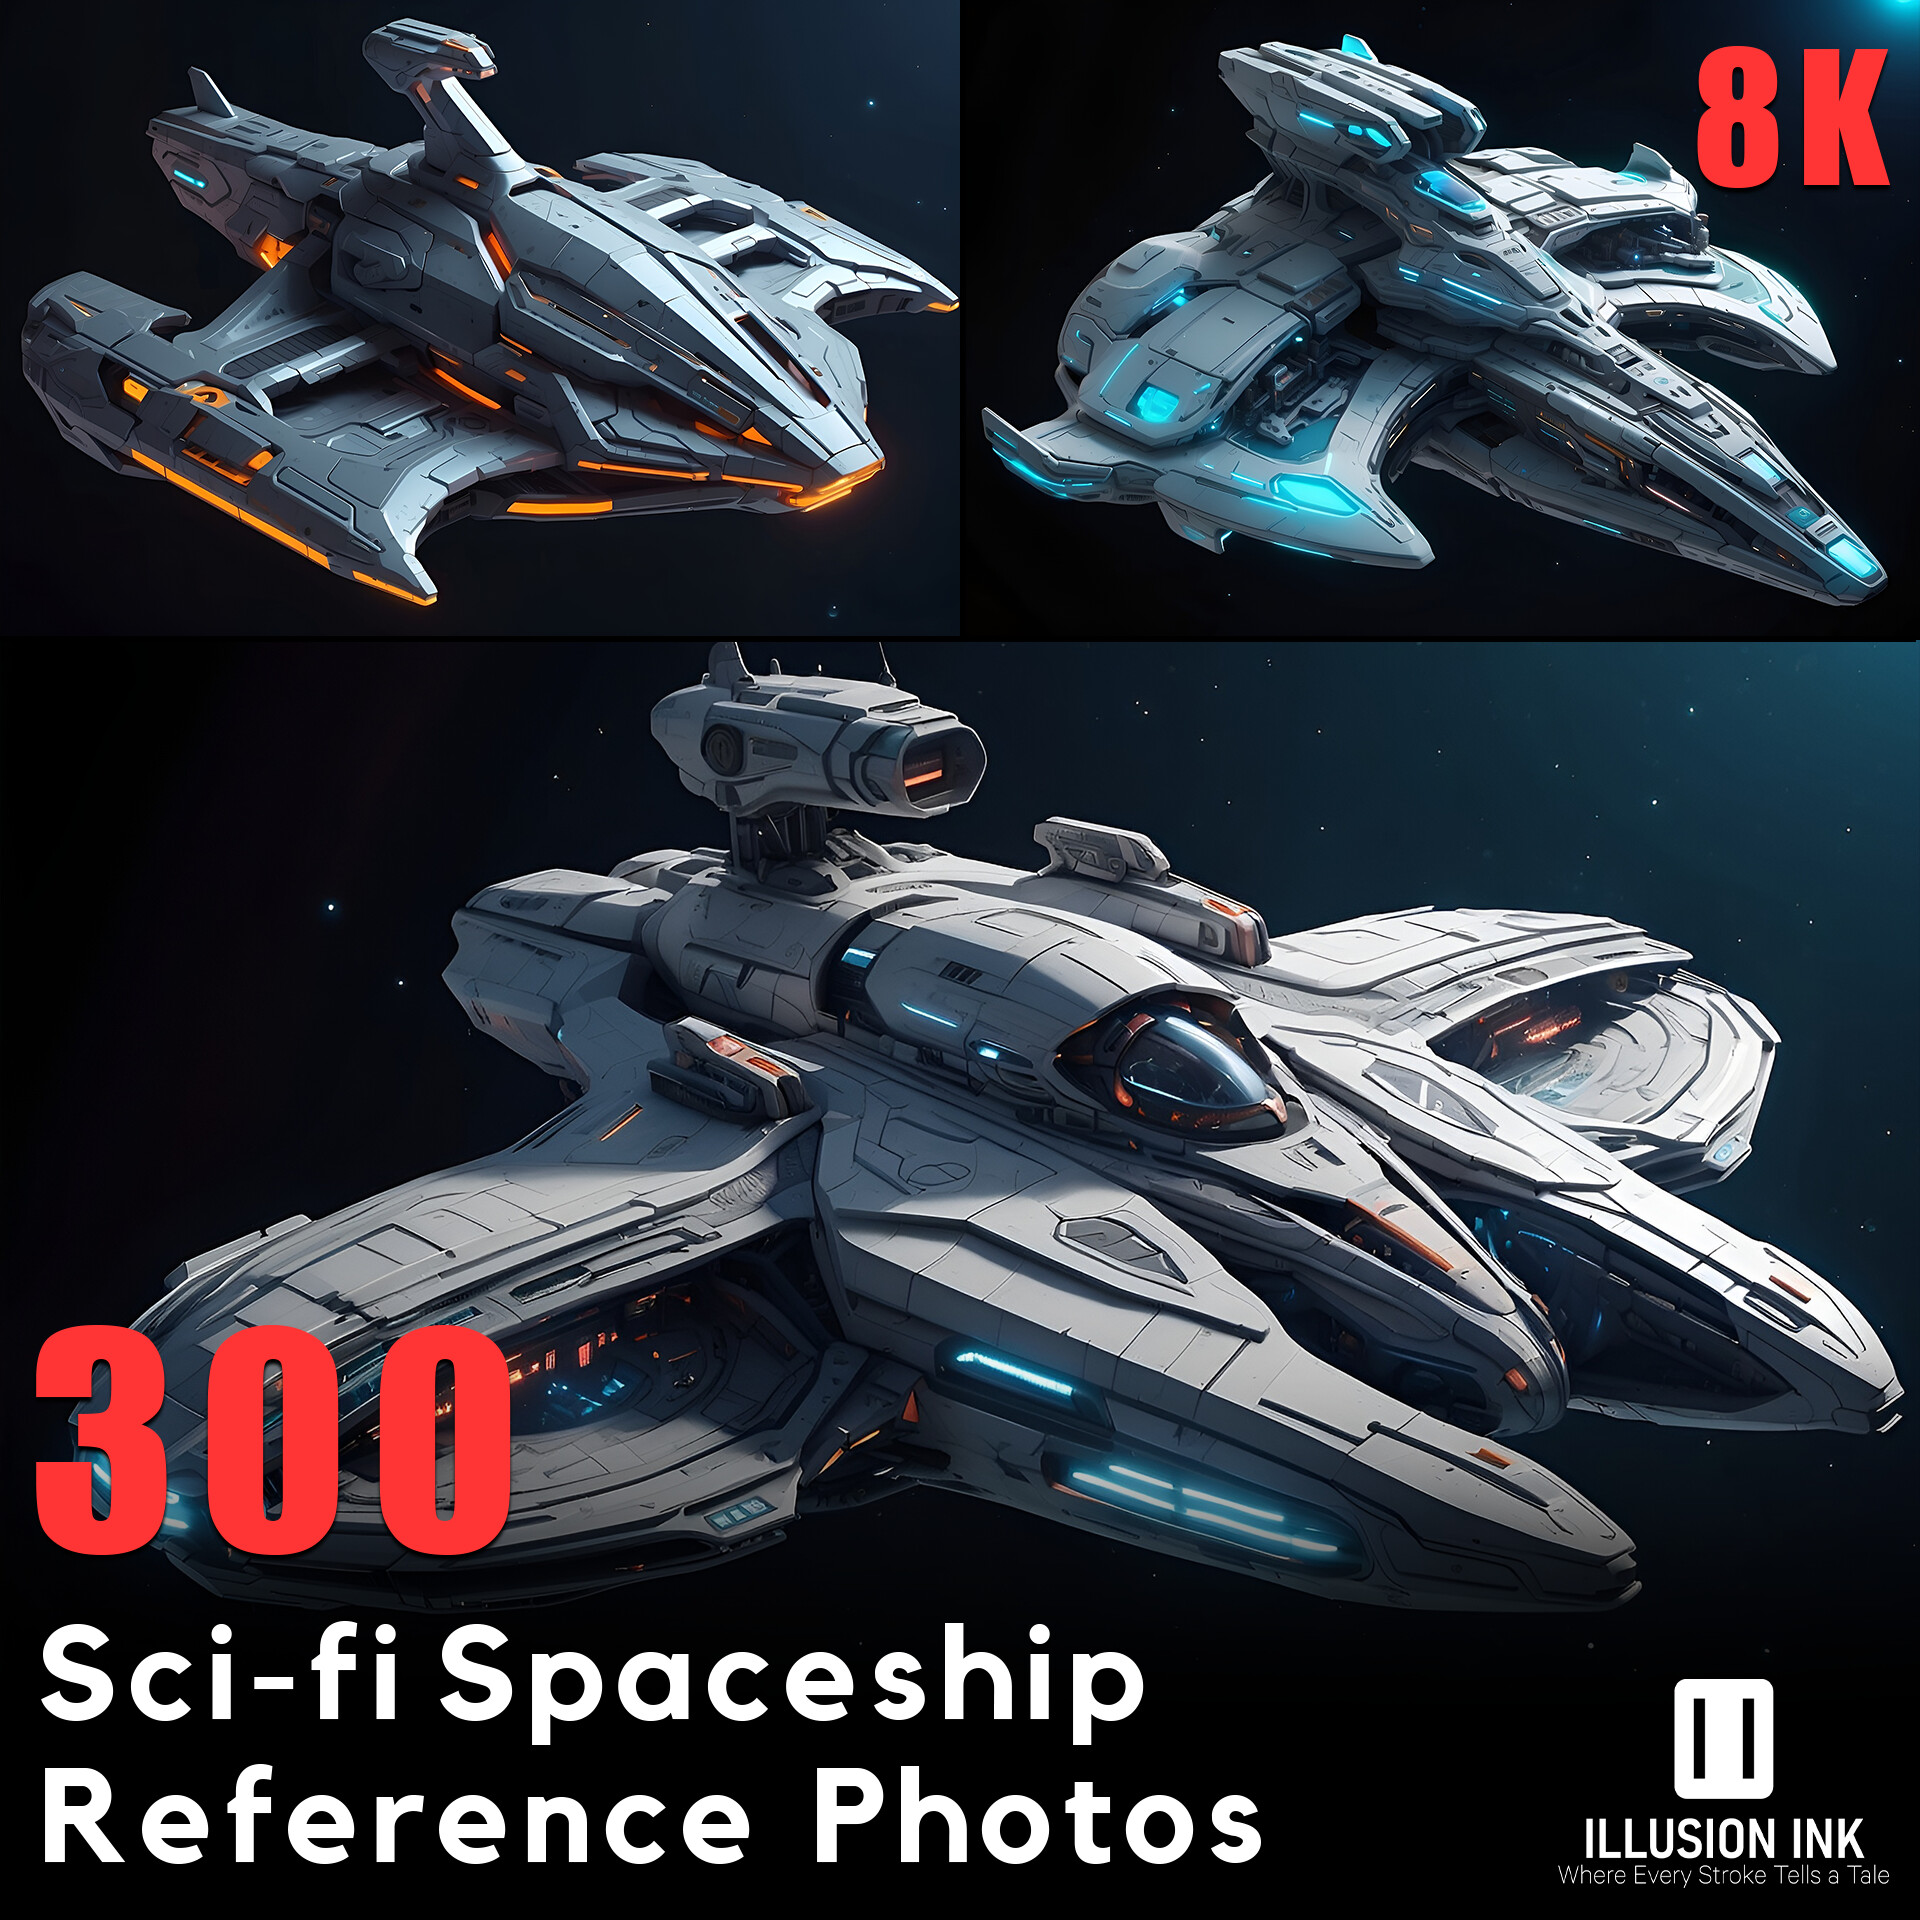 ArtStation - 300 Sci-fi Spaceship Reference Photos | 8K